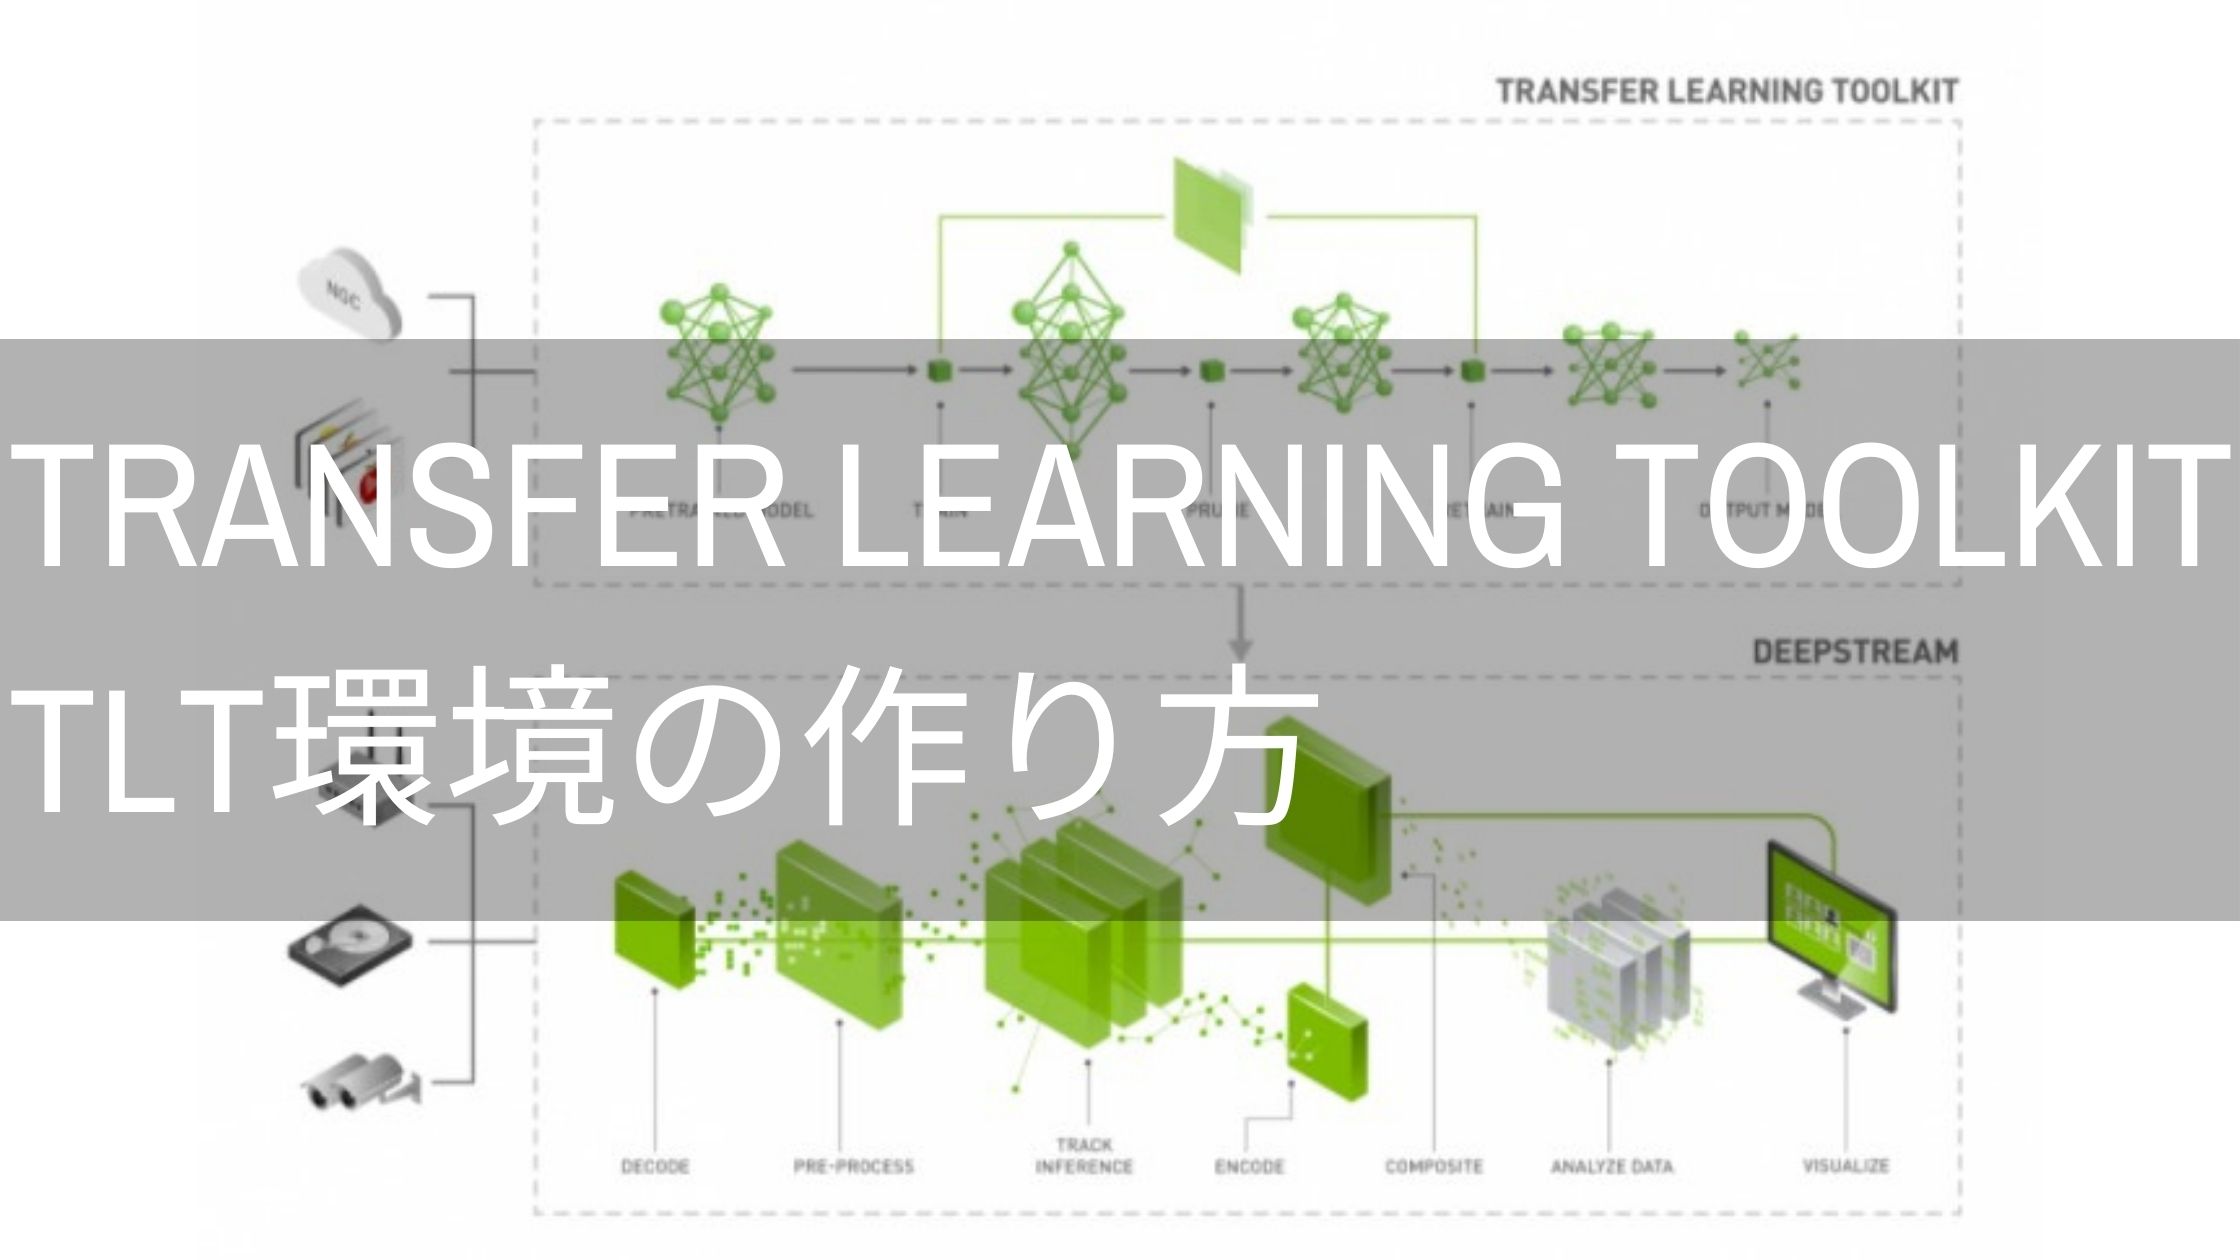 TLT(Transfer Learning Toolkit)環境の作り方